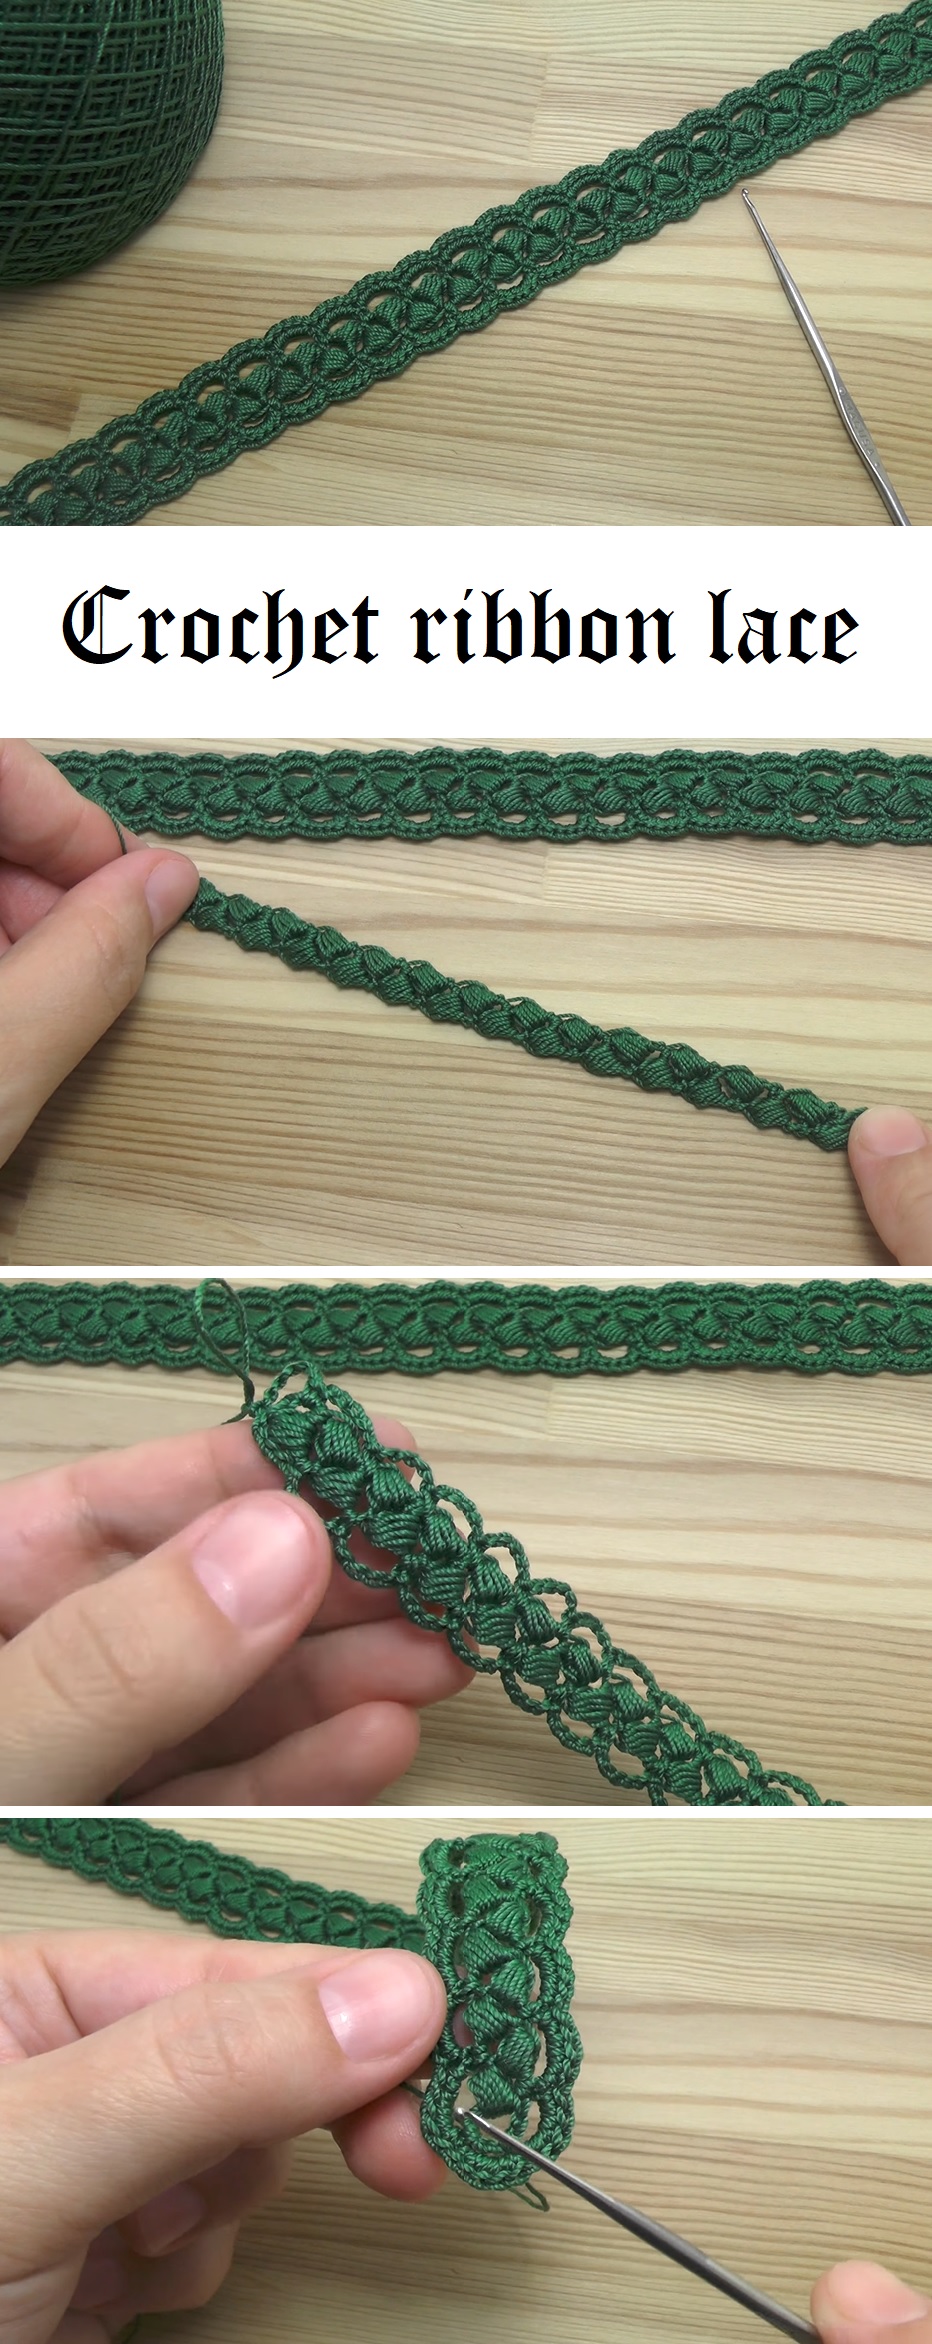 Crochet Ribbon Lace Tutorial